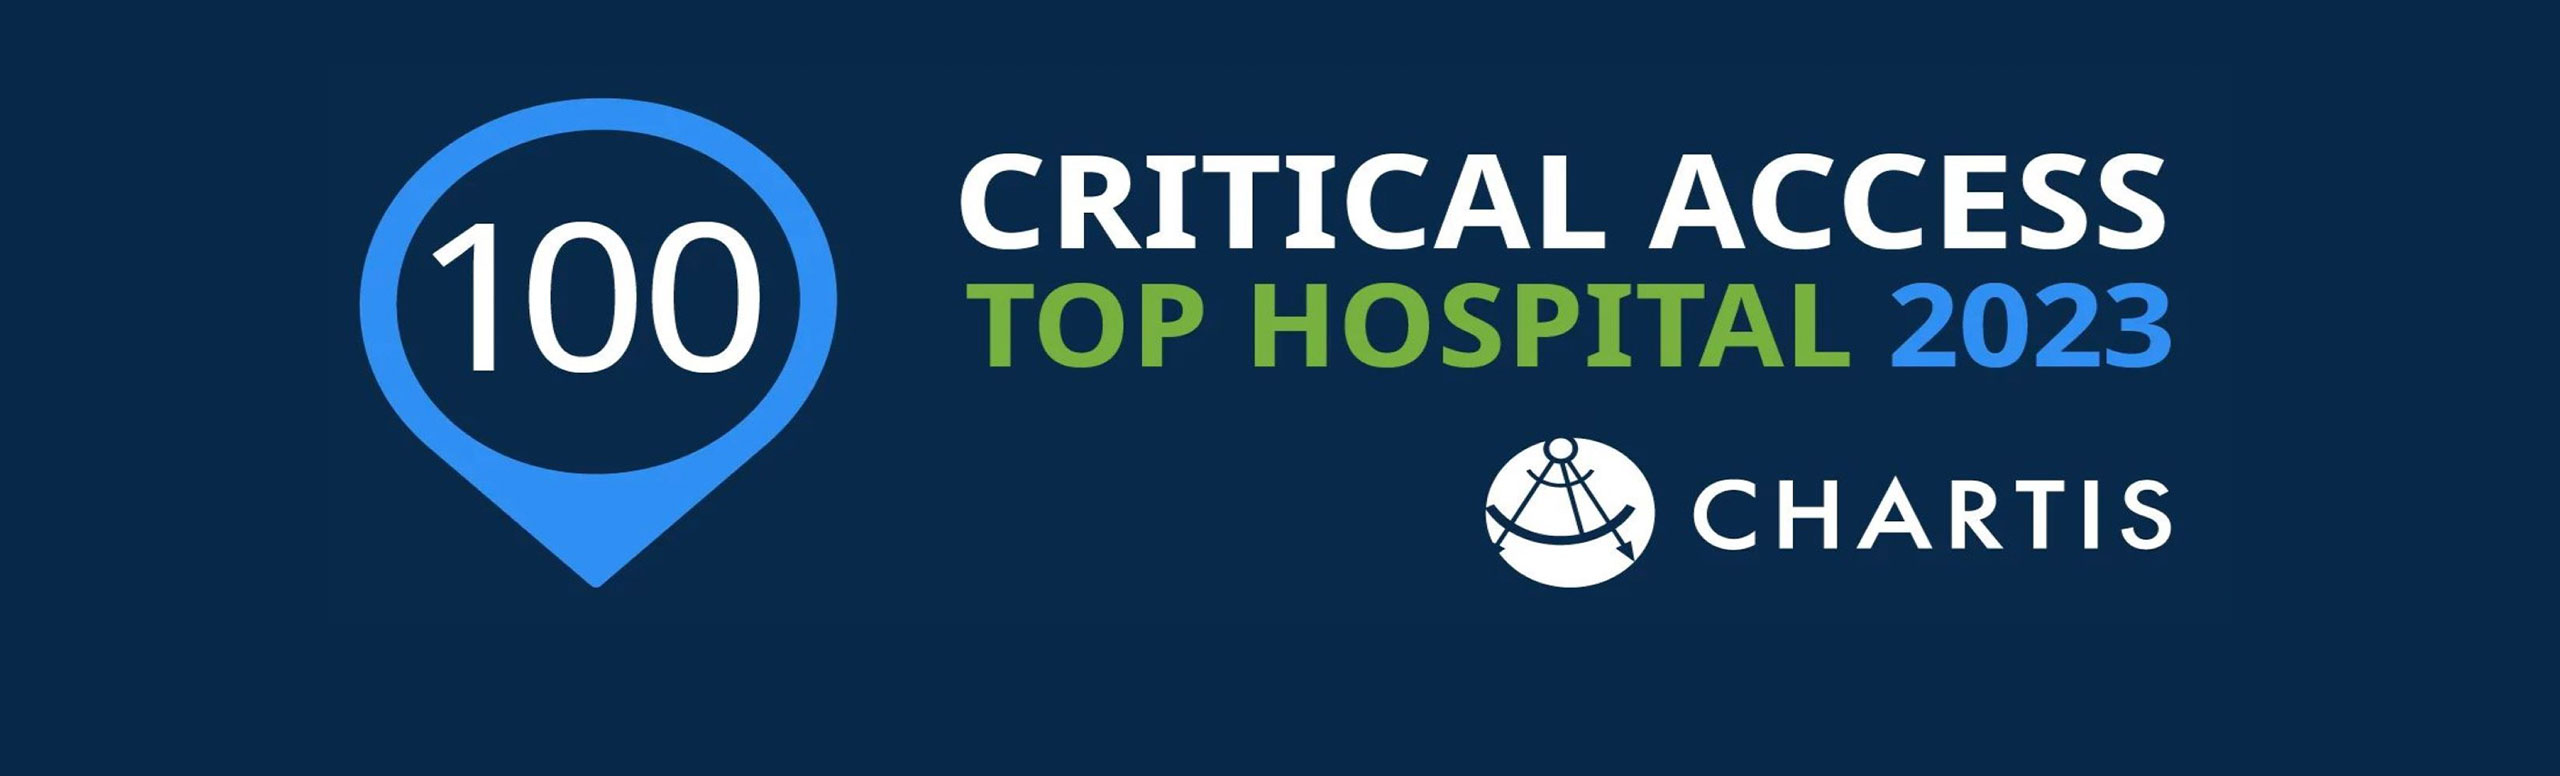 Critical Access Top Hospital 2023
Chartis